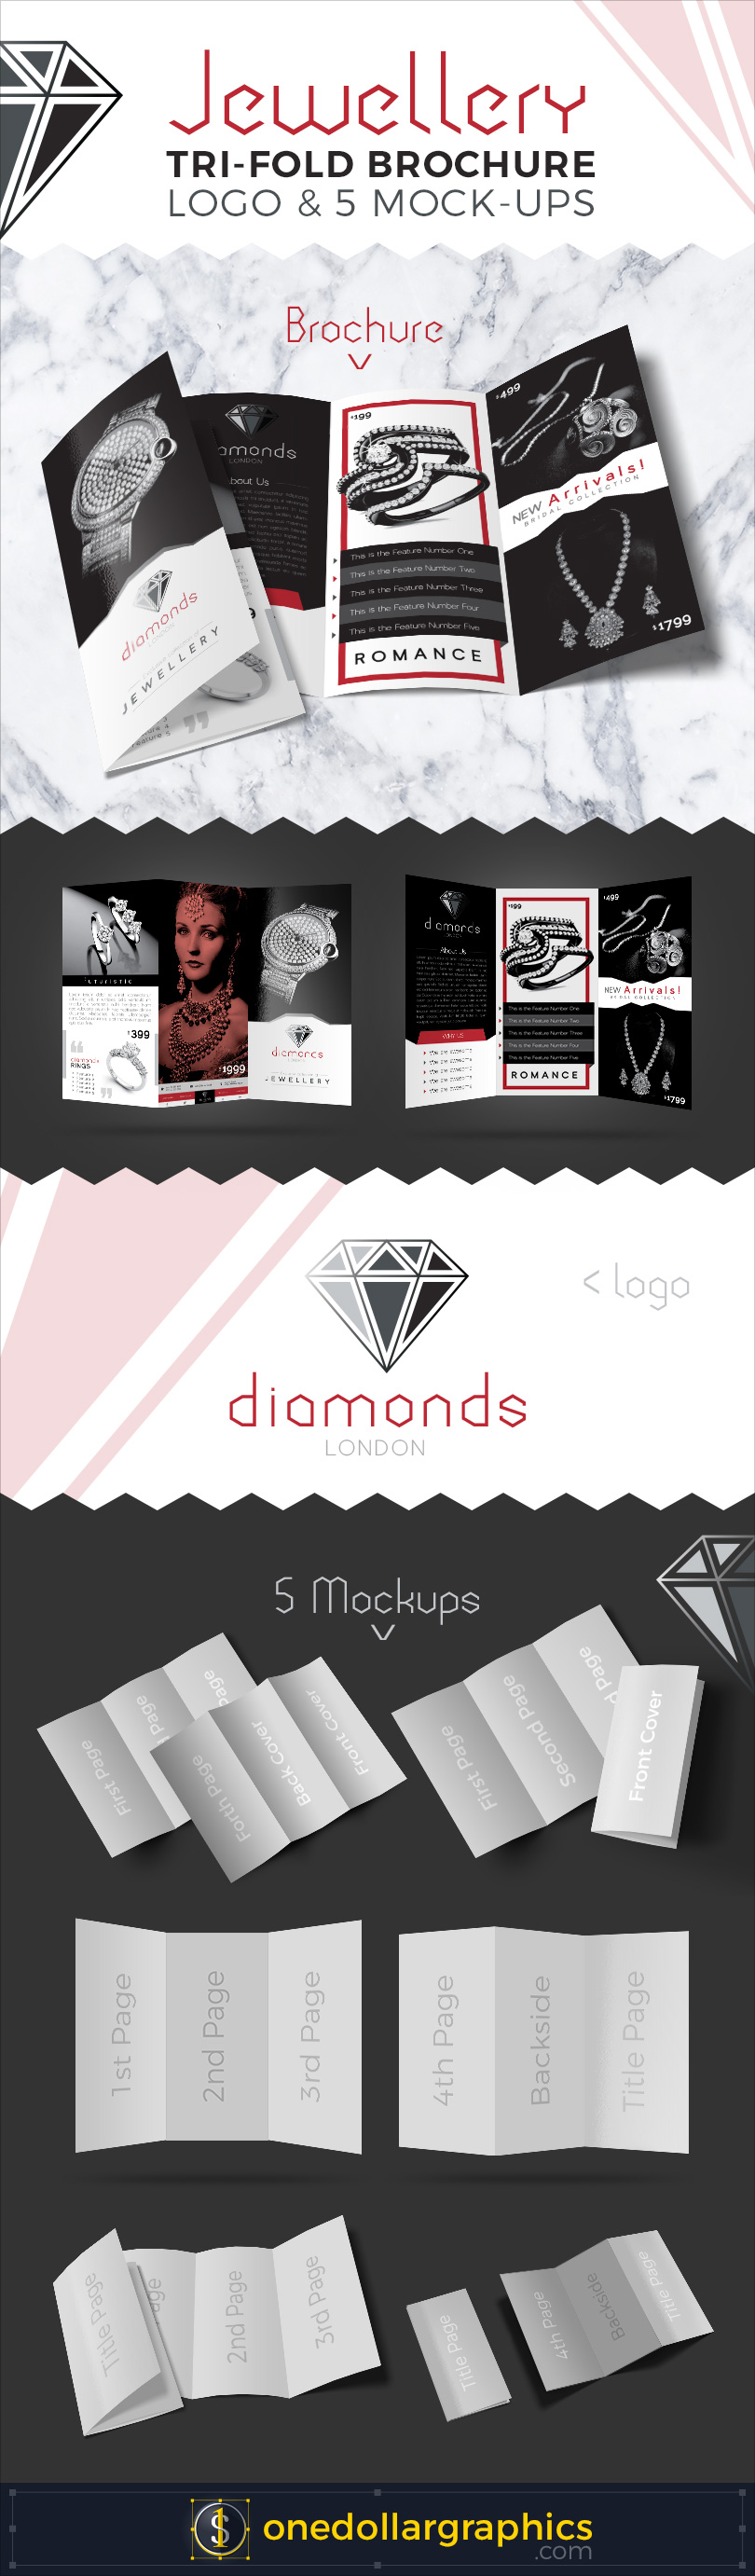 Jewellery-Tri-Fold-Brochure-&-Logo-Design-Template-with-5-Mock-up-PSD-Files